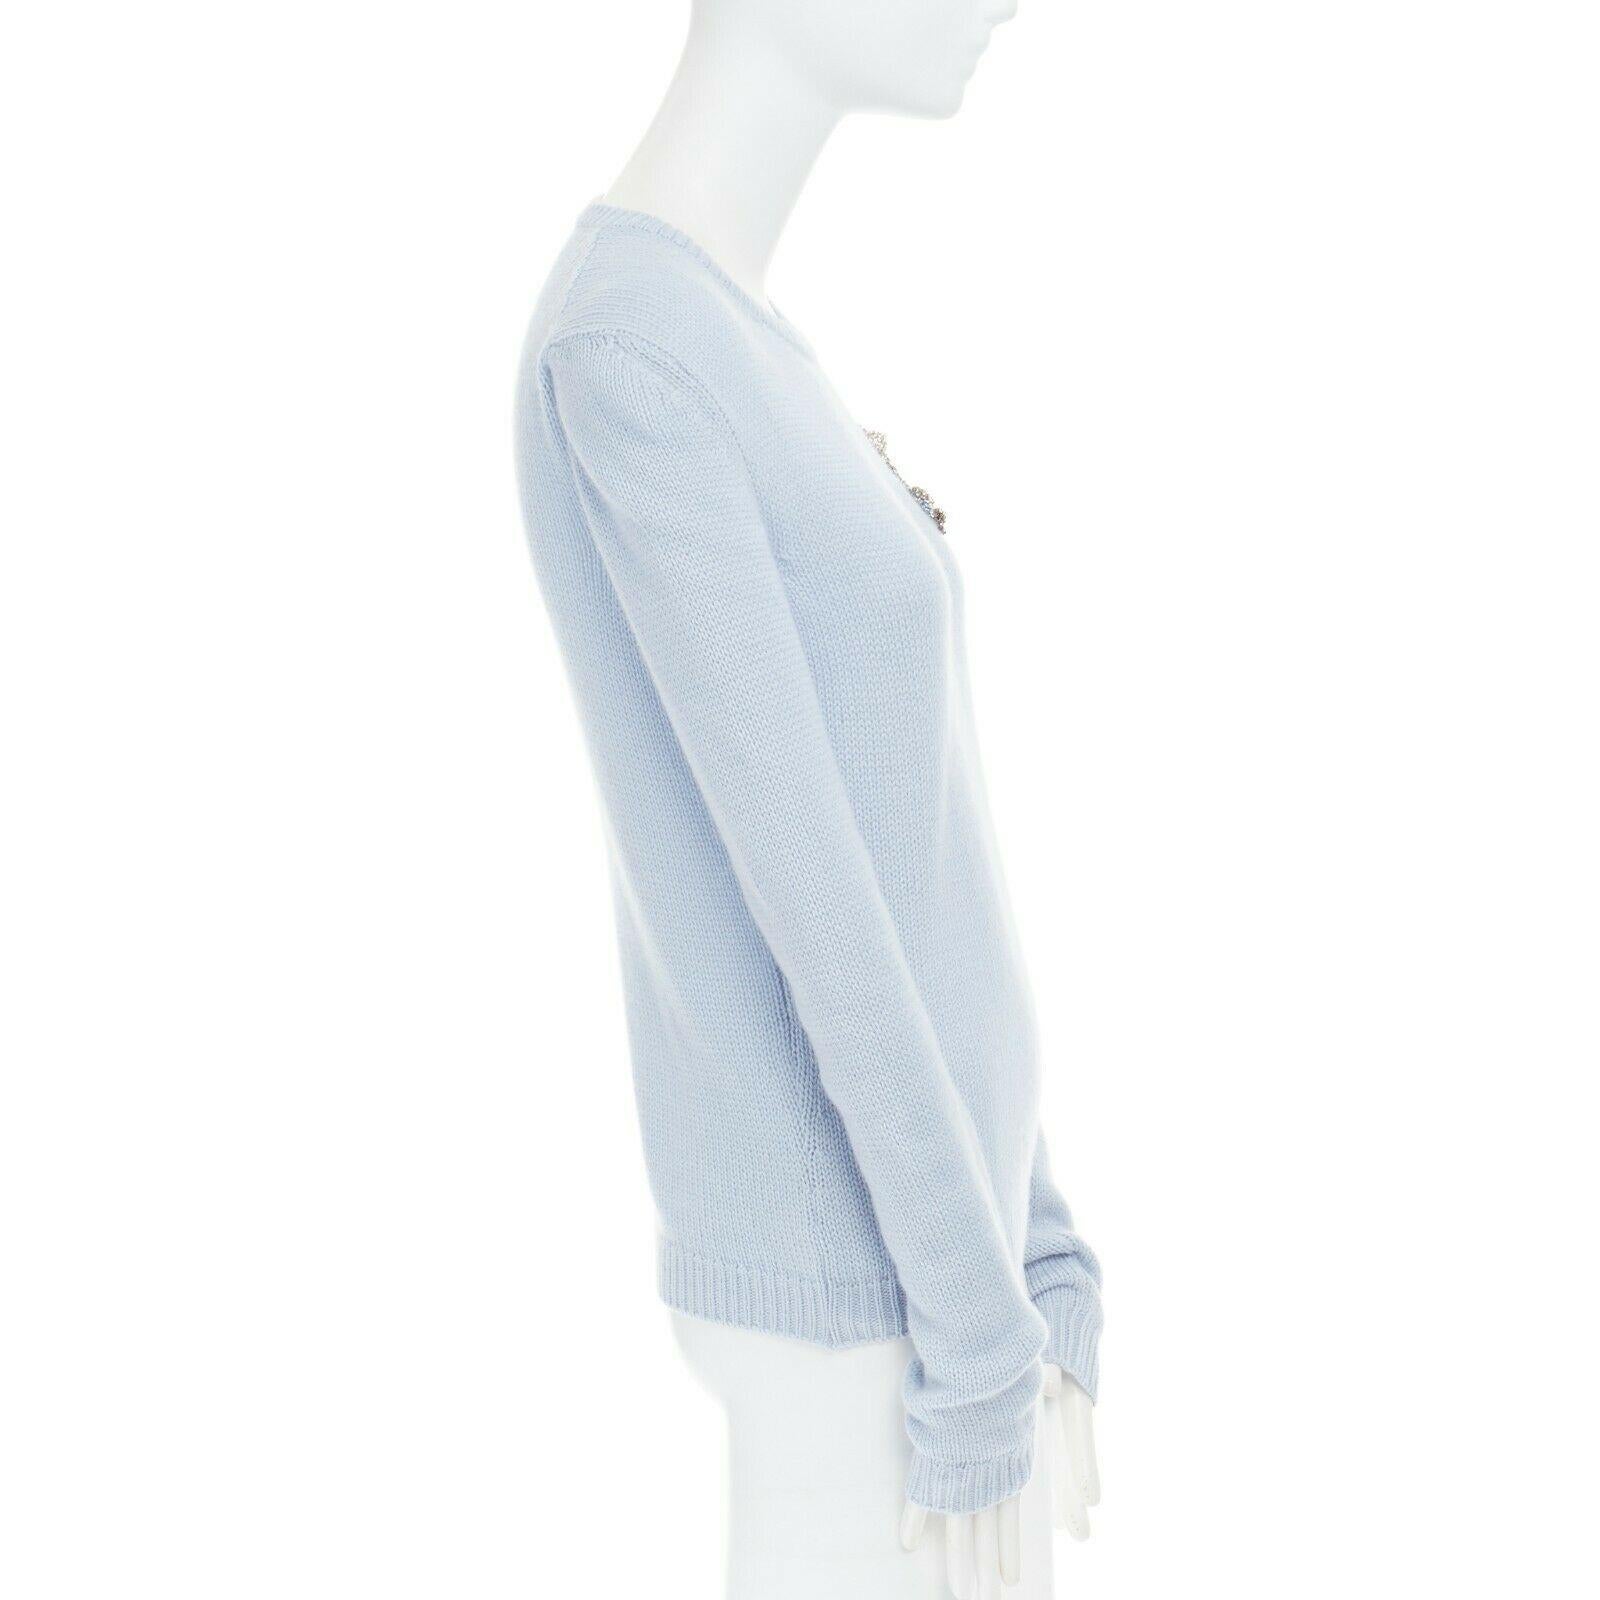 Gray MIU MIU wool knit pastel blue crystal embellished flower brooch sweater top M